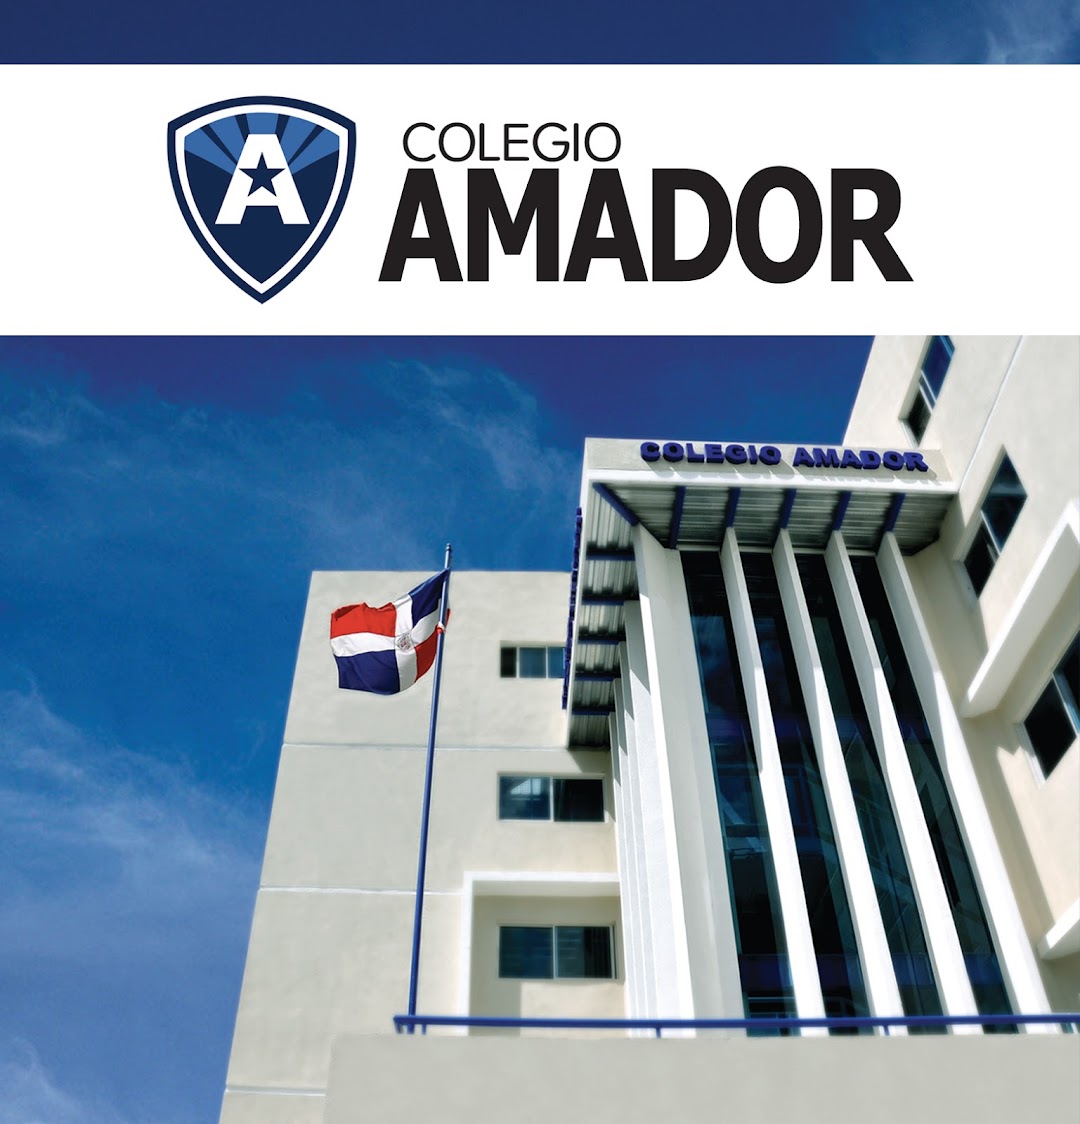 Colegio Amador